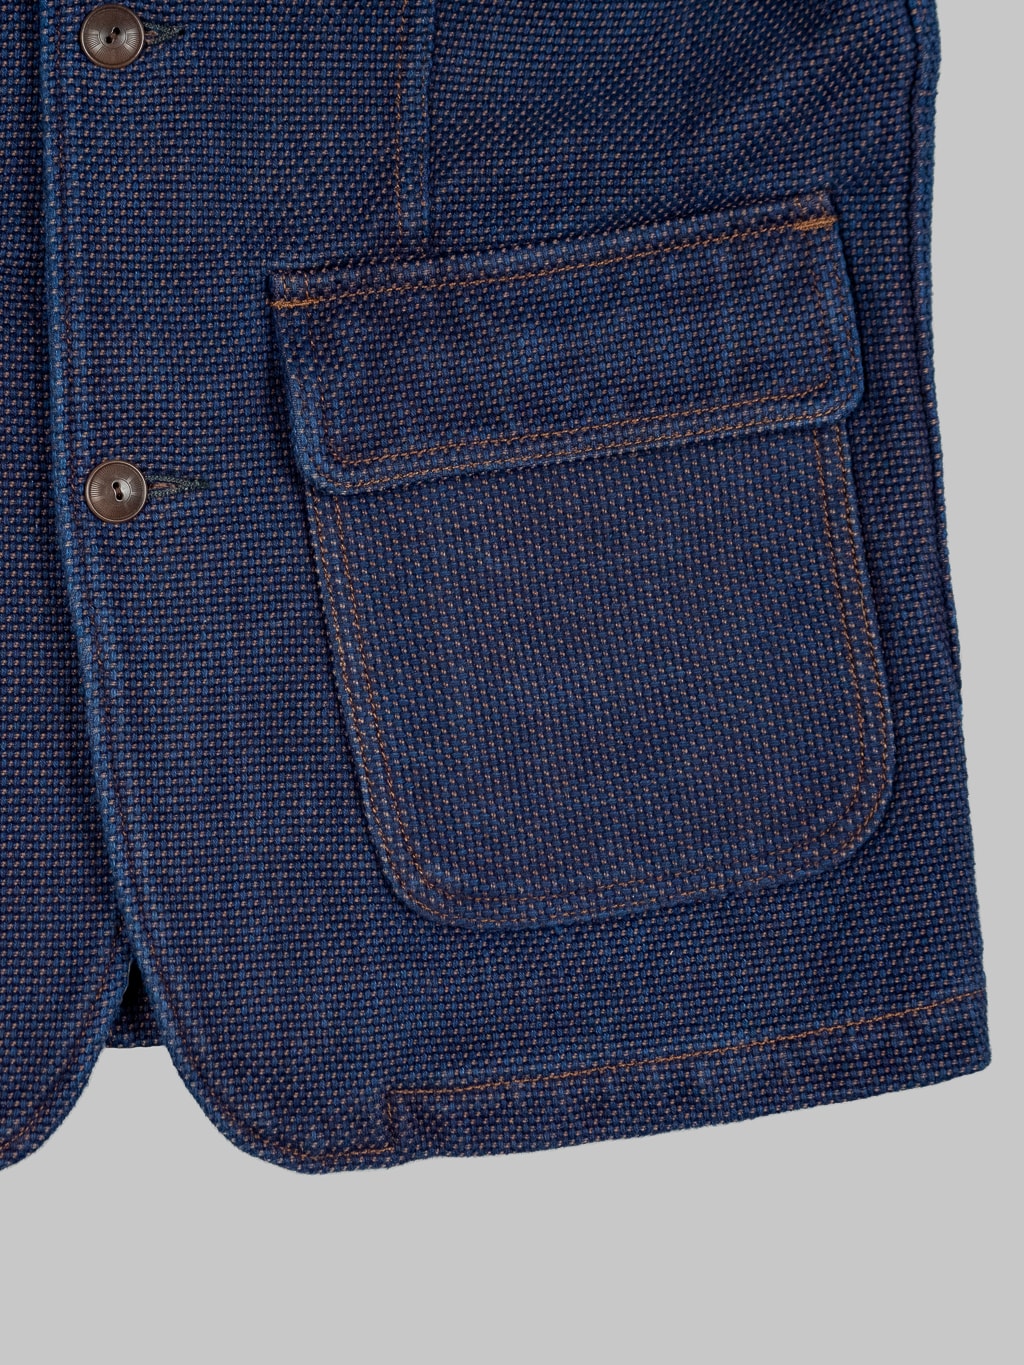 Studio Dartisan indigo kakishibu sashiko selvedge jacket waist pocket